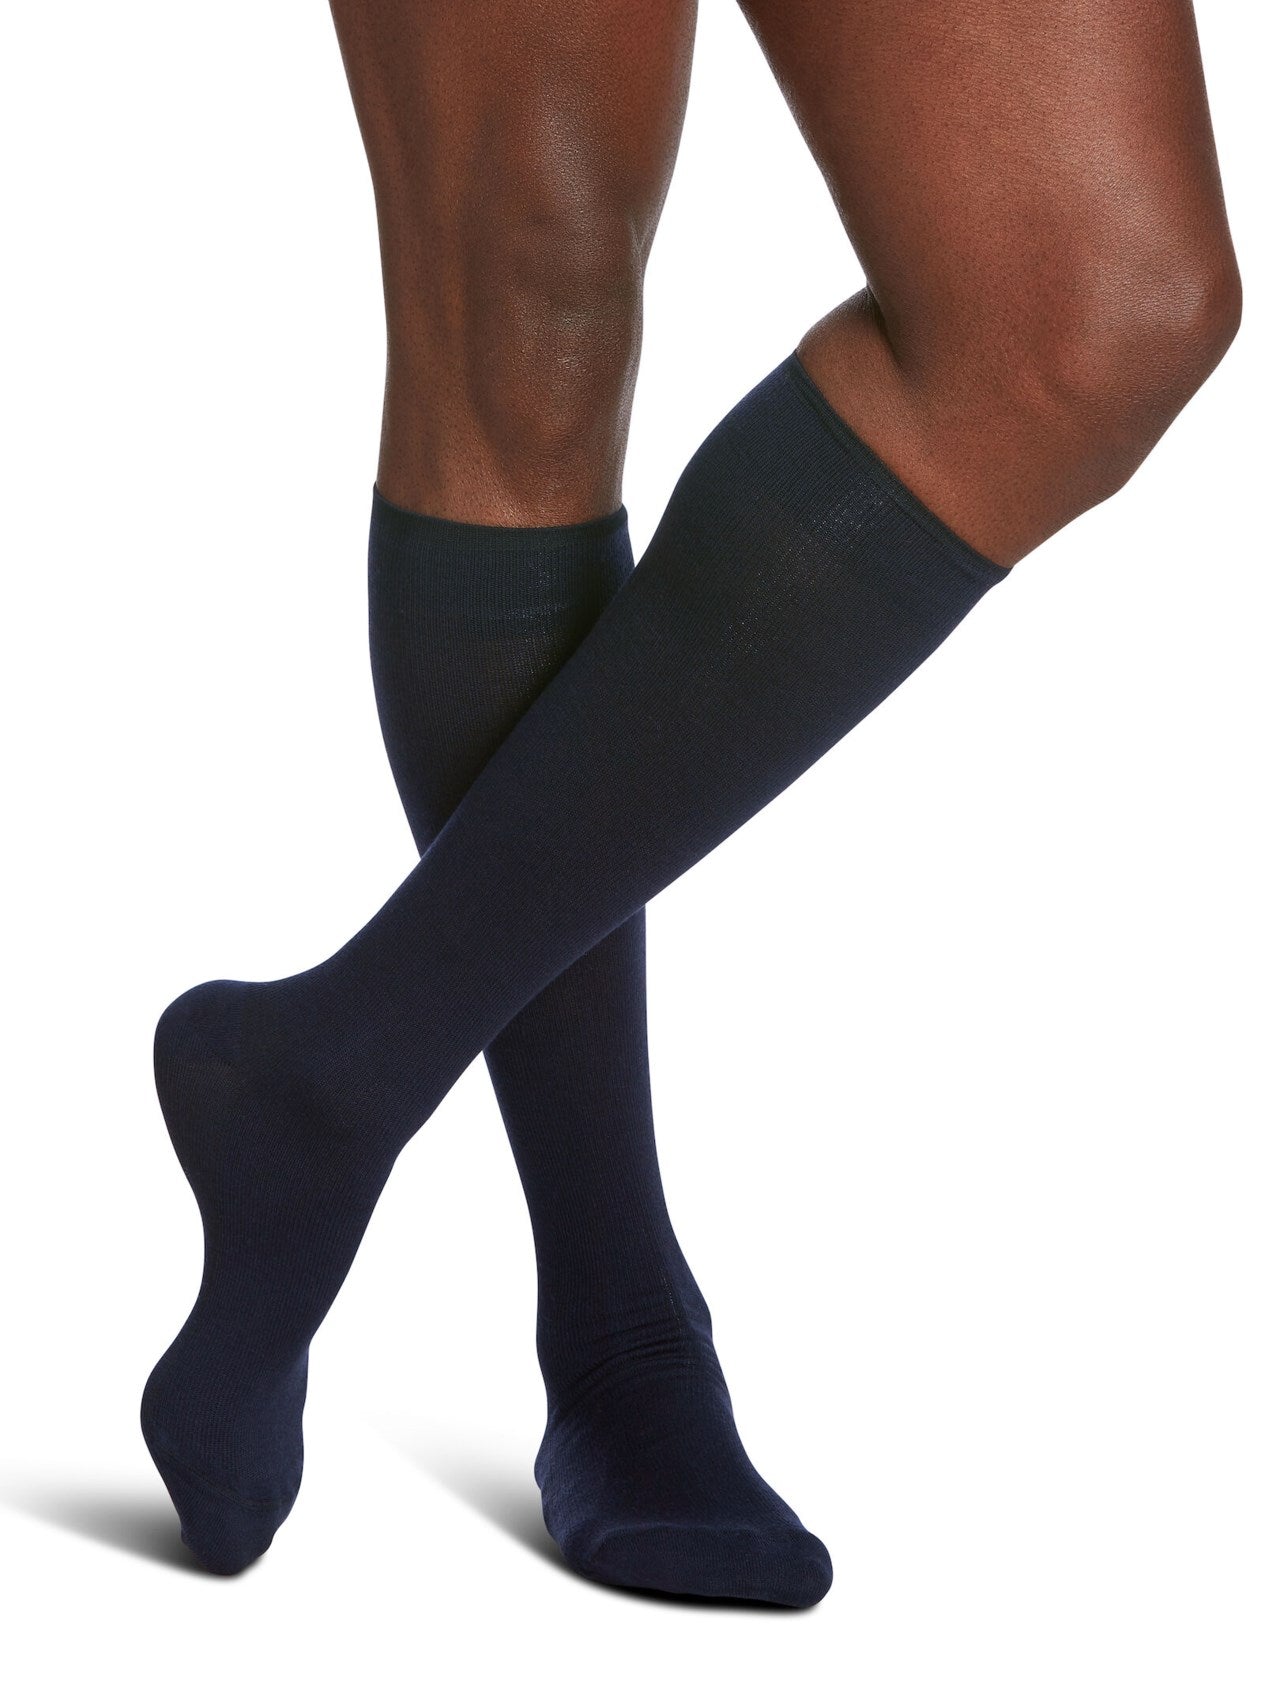 Sigvaris 240 Merino Wool Compression Socks 20-30 mmHg Calf High for Women Closed Toe